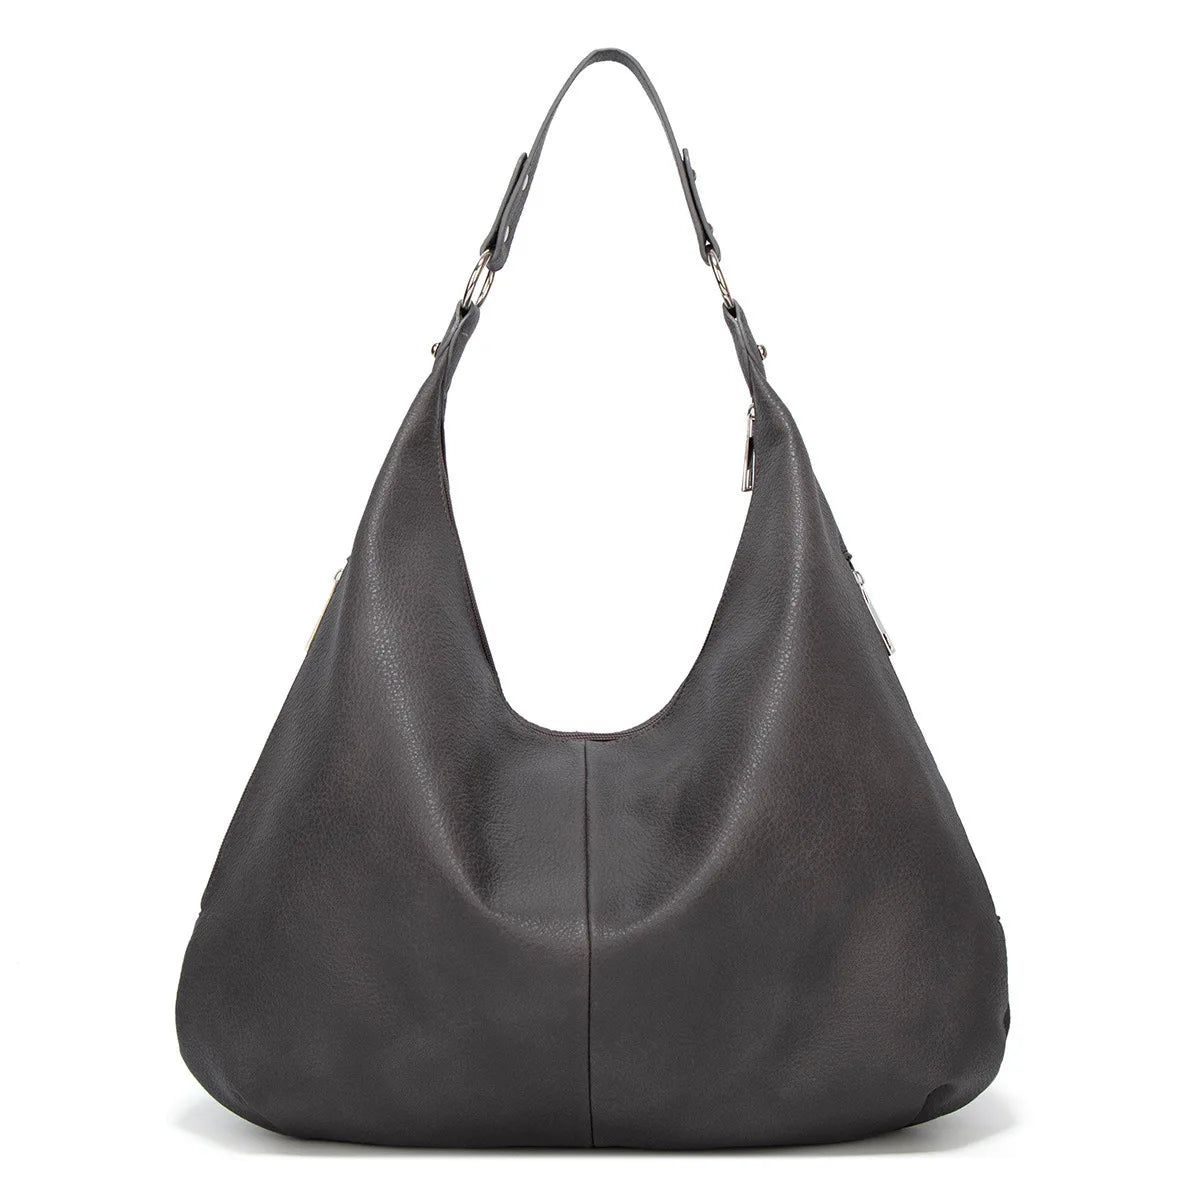 Black Leather Hobo Shoulder Bag The Store Bags C Dark Gray 